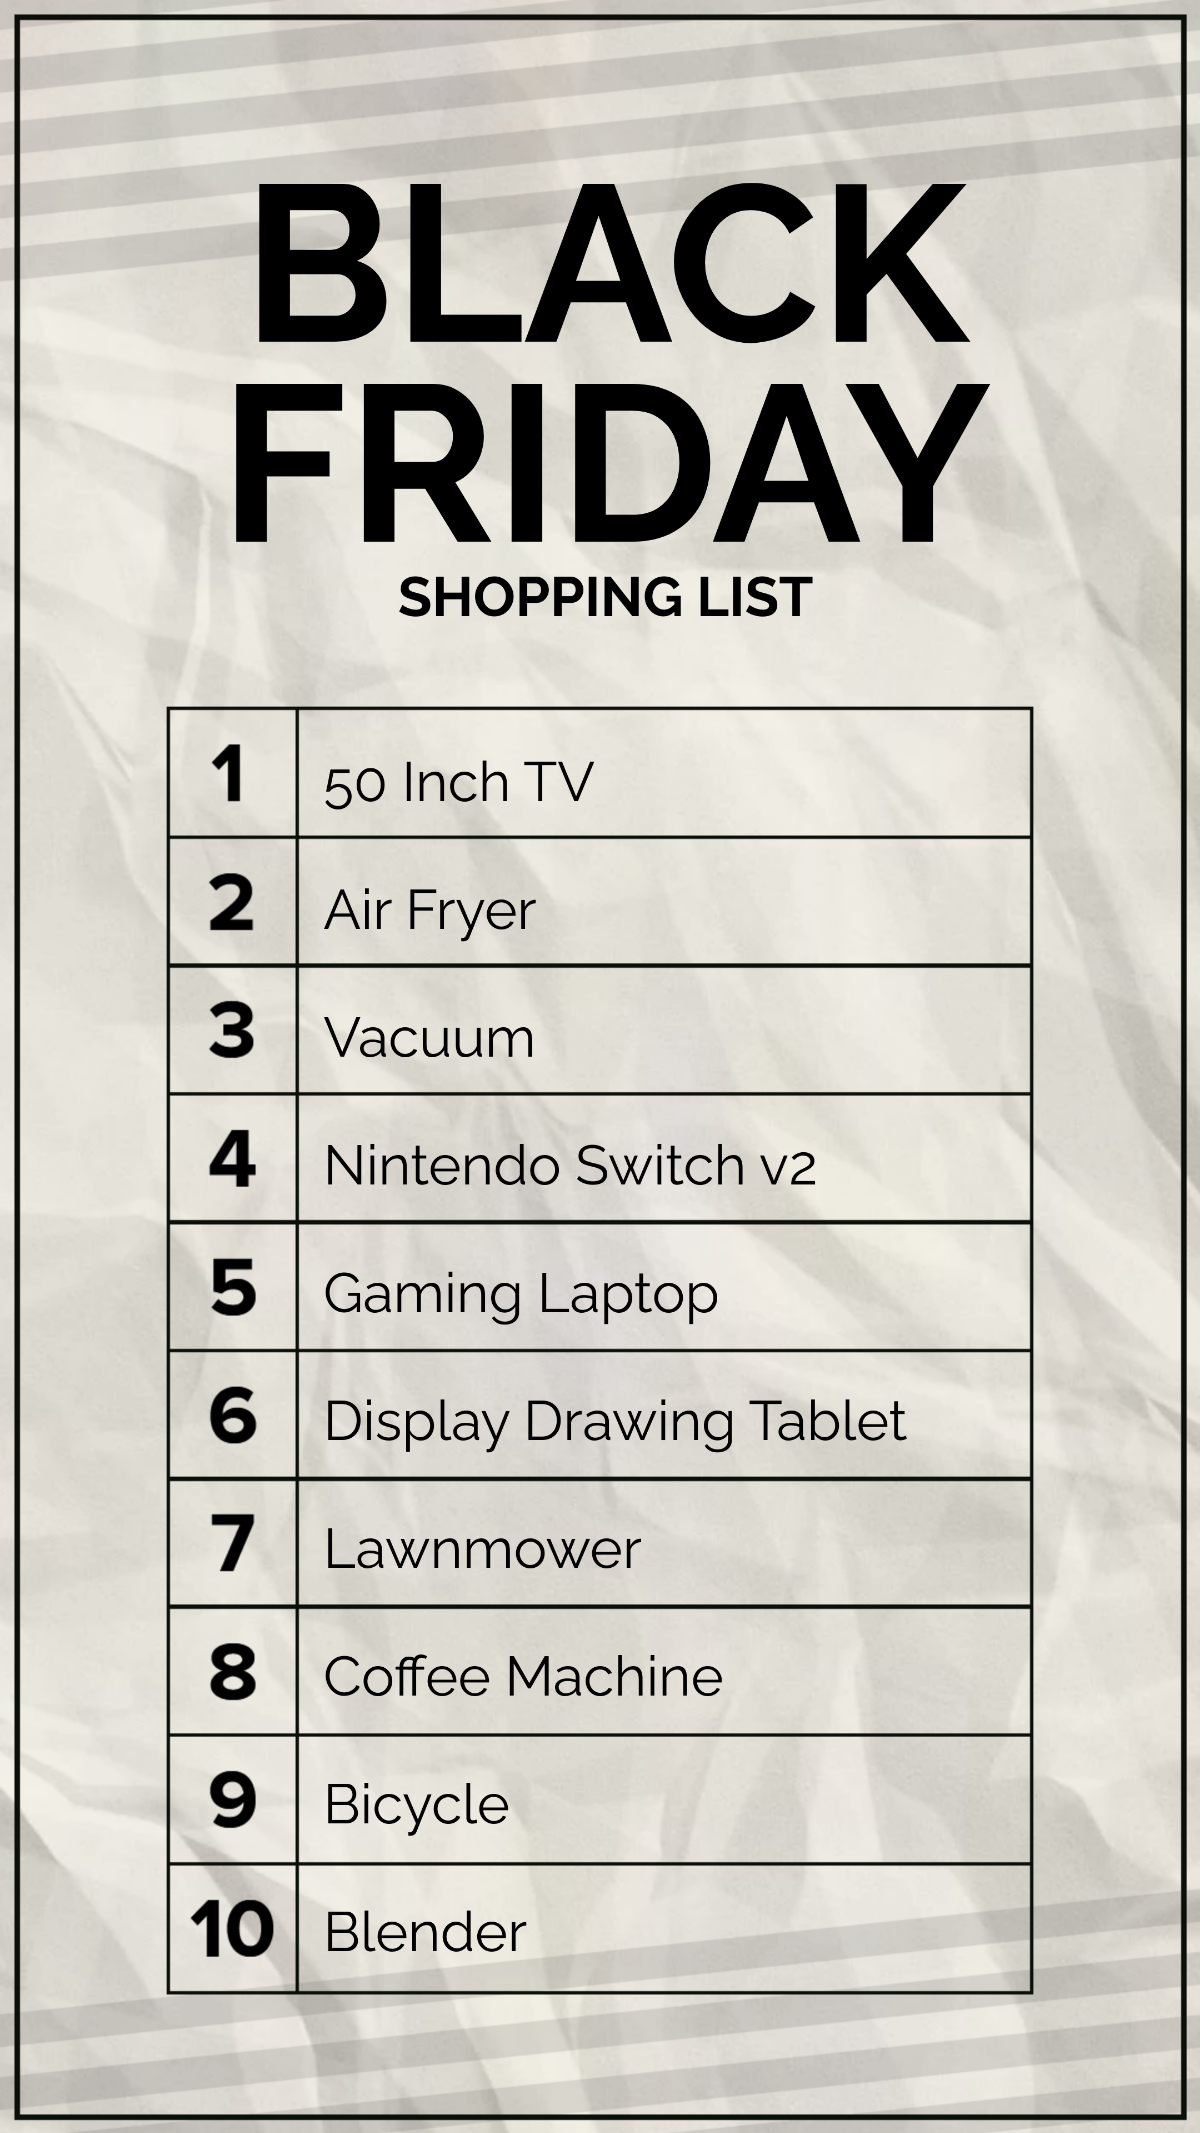 Black Friday Shopping List Template